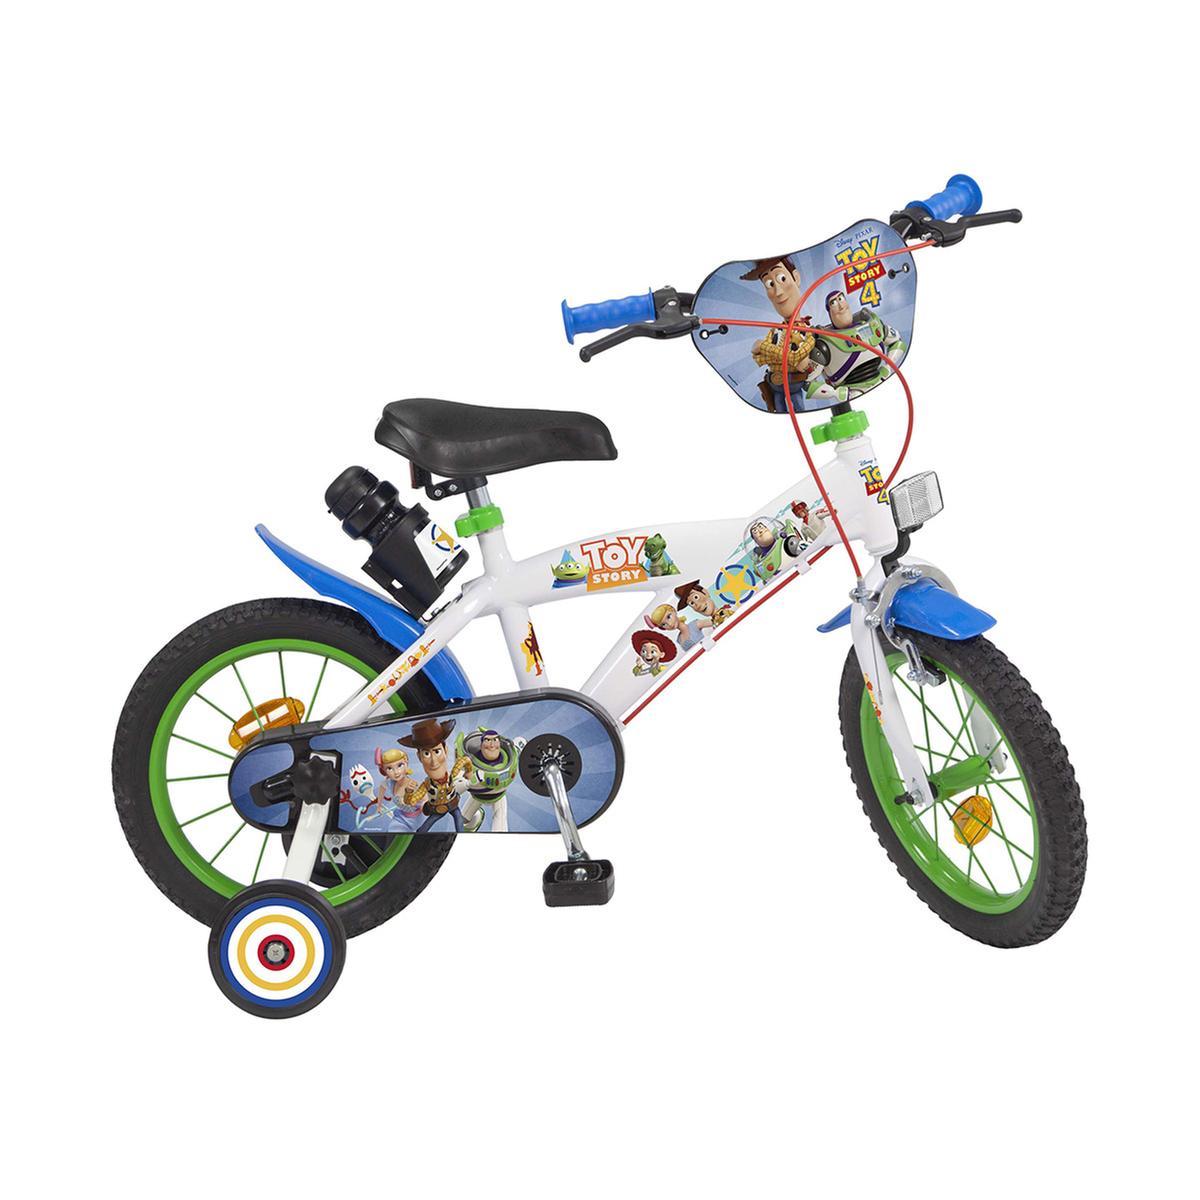 Bicicleta 14 Pulgadas Minnie 4 a 6 Años 【Oferta ToysManiatic】